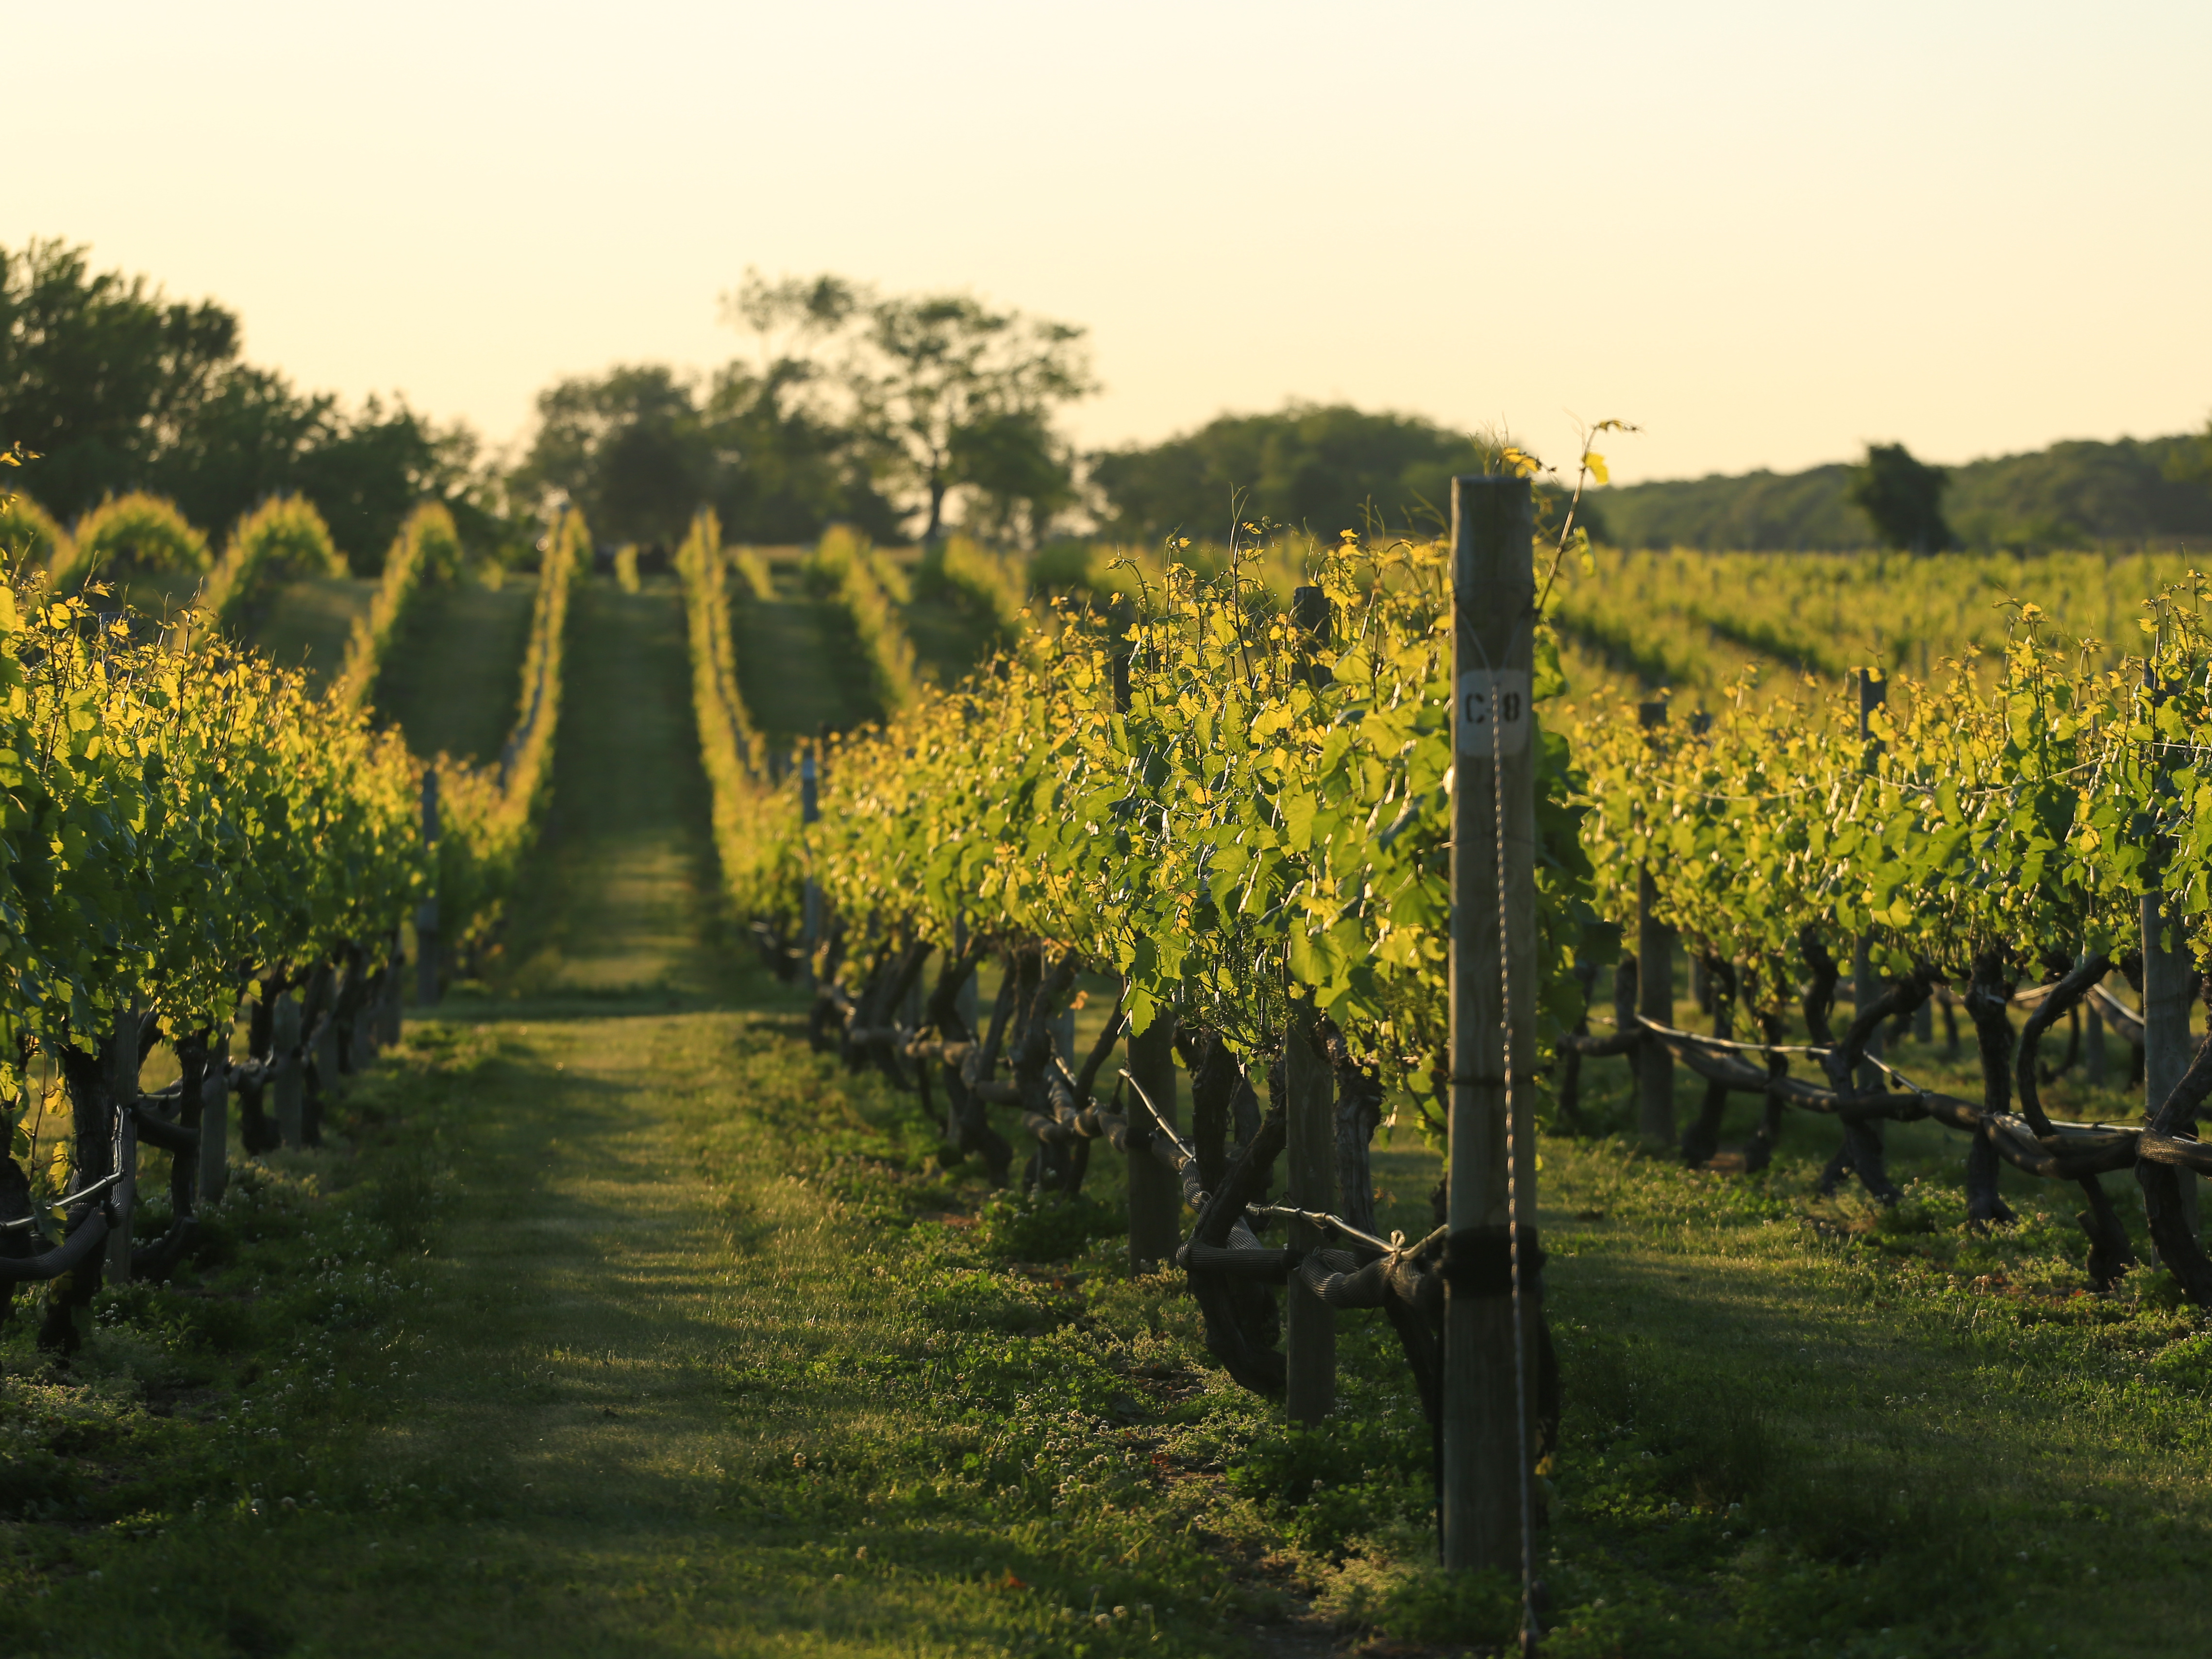 Grape vineyard from New York state's wine industry